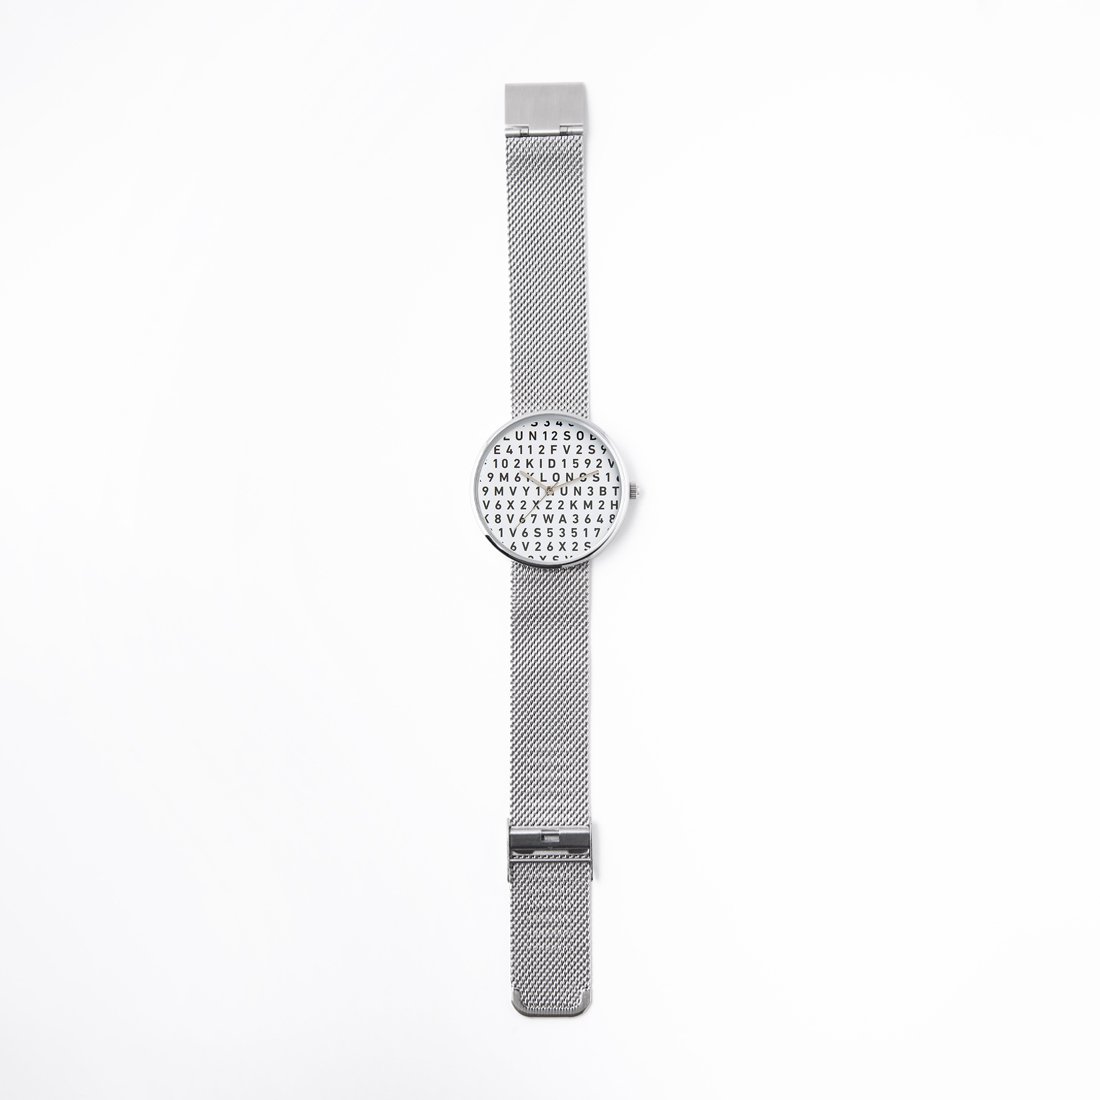 KLON SERIAL NUMBER S -SILVER MESH- 40mm カジュアル 腕時計